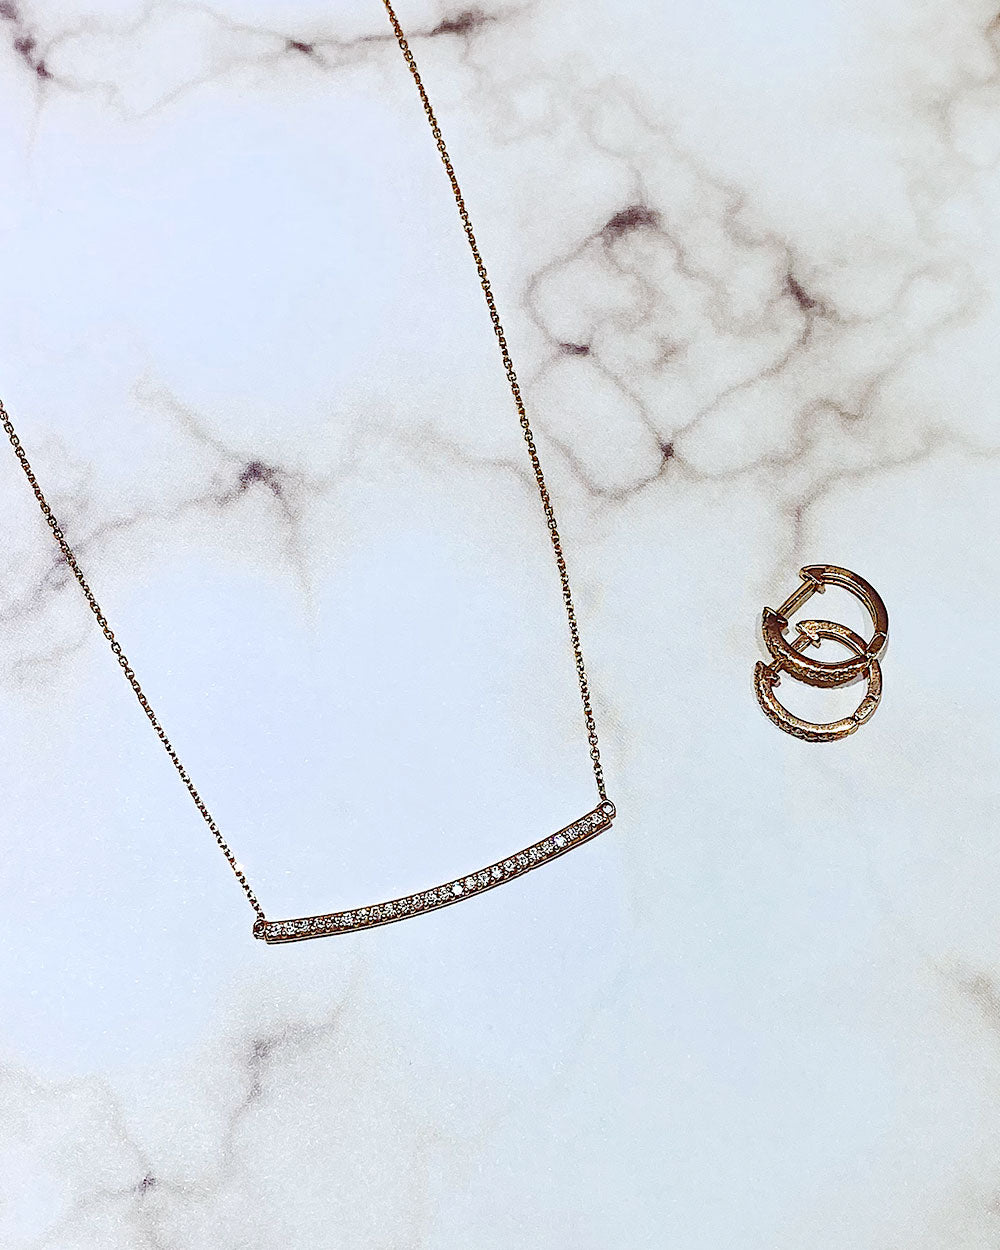 Diamond Bar Necklace - Rose Gold